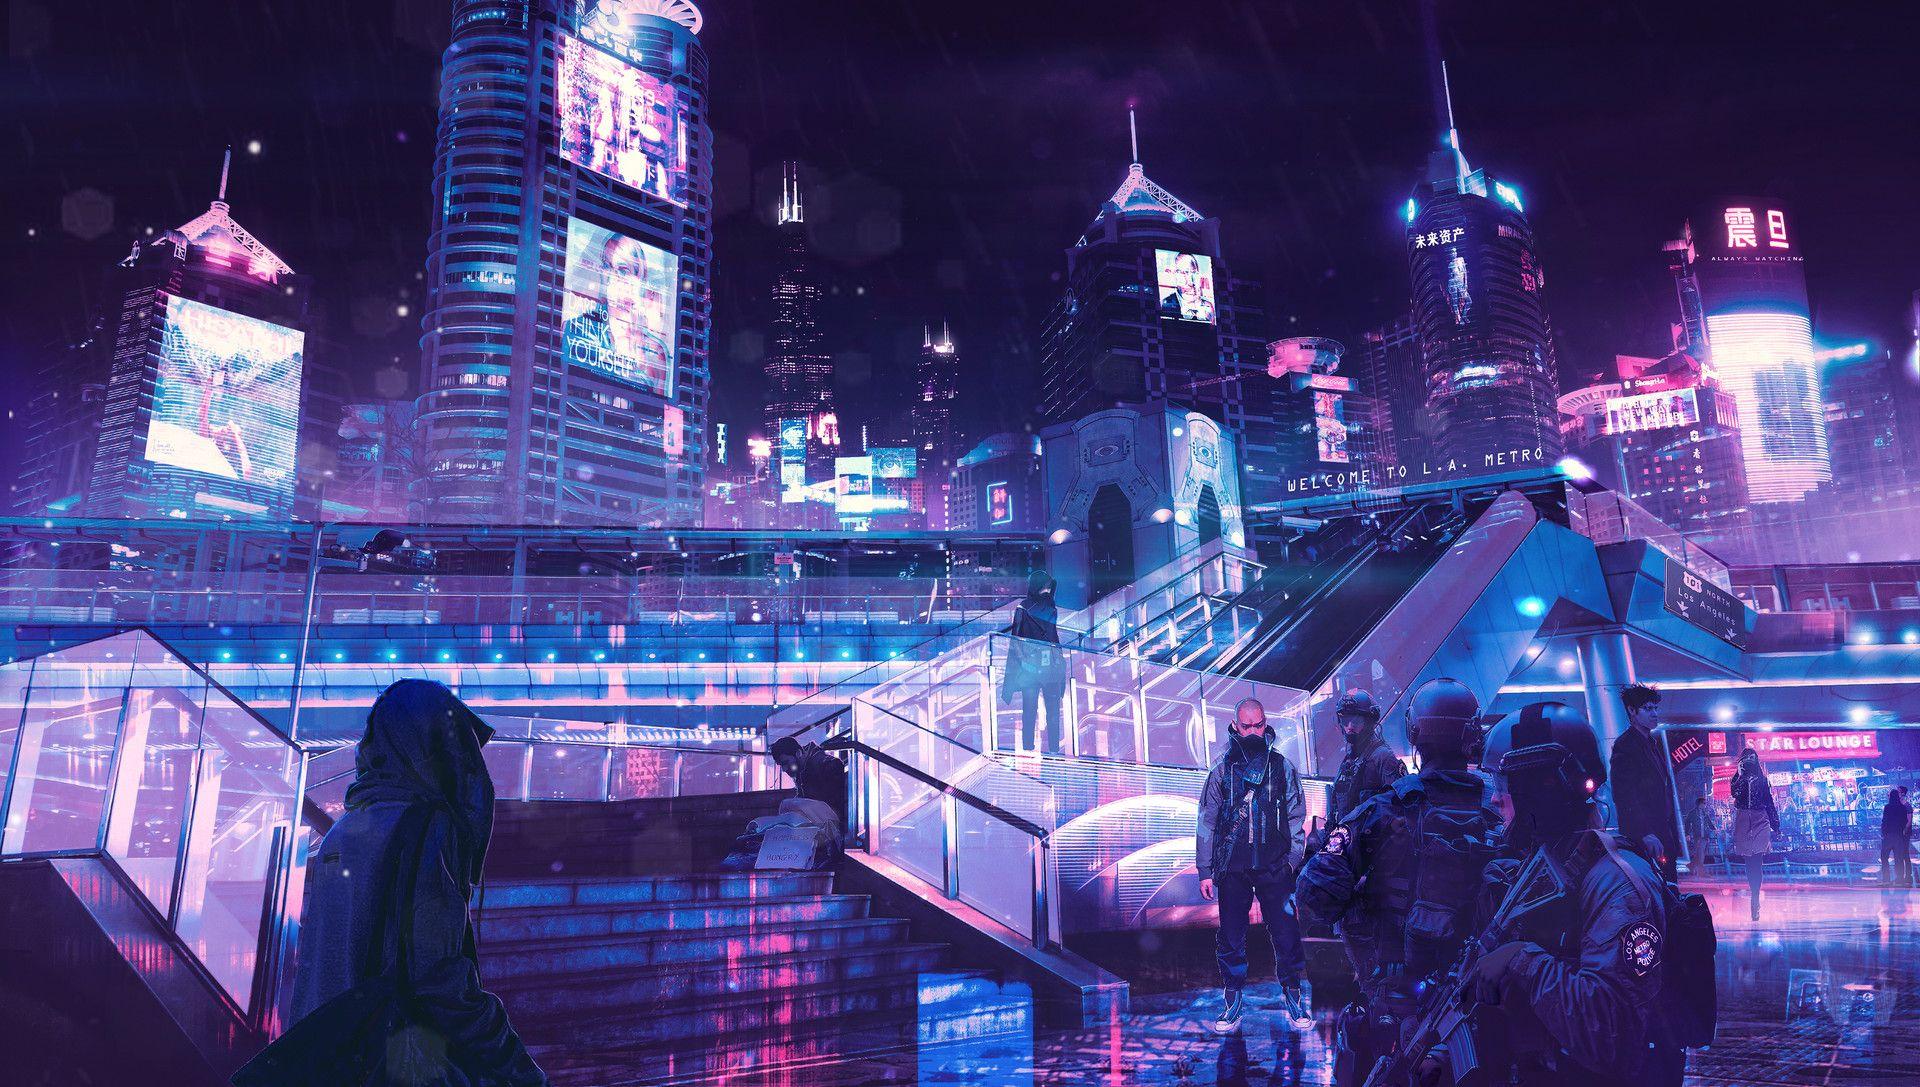 Cyberpunk City [3840x1633] : r/wallpapers